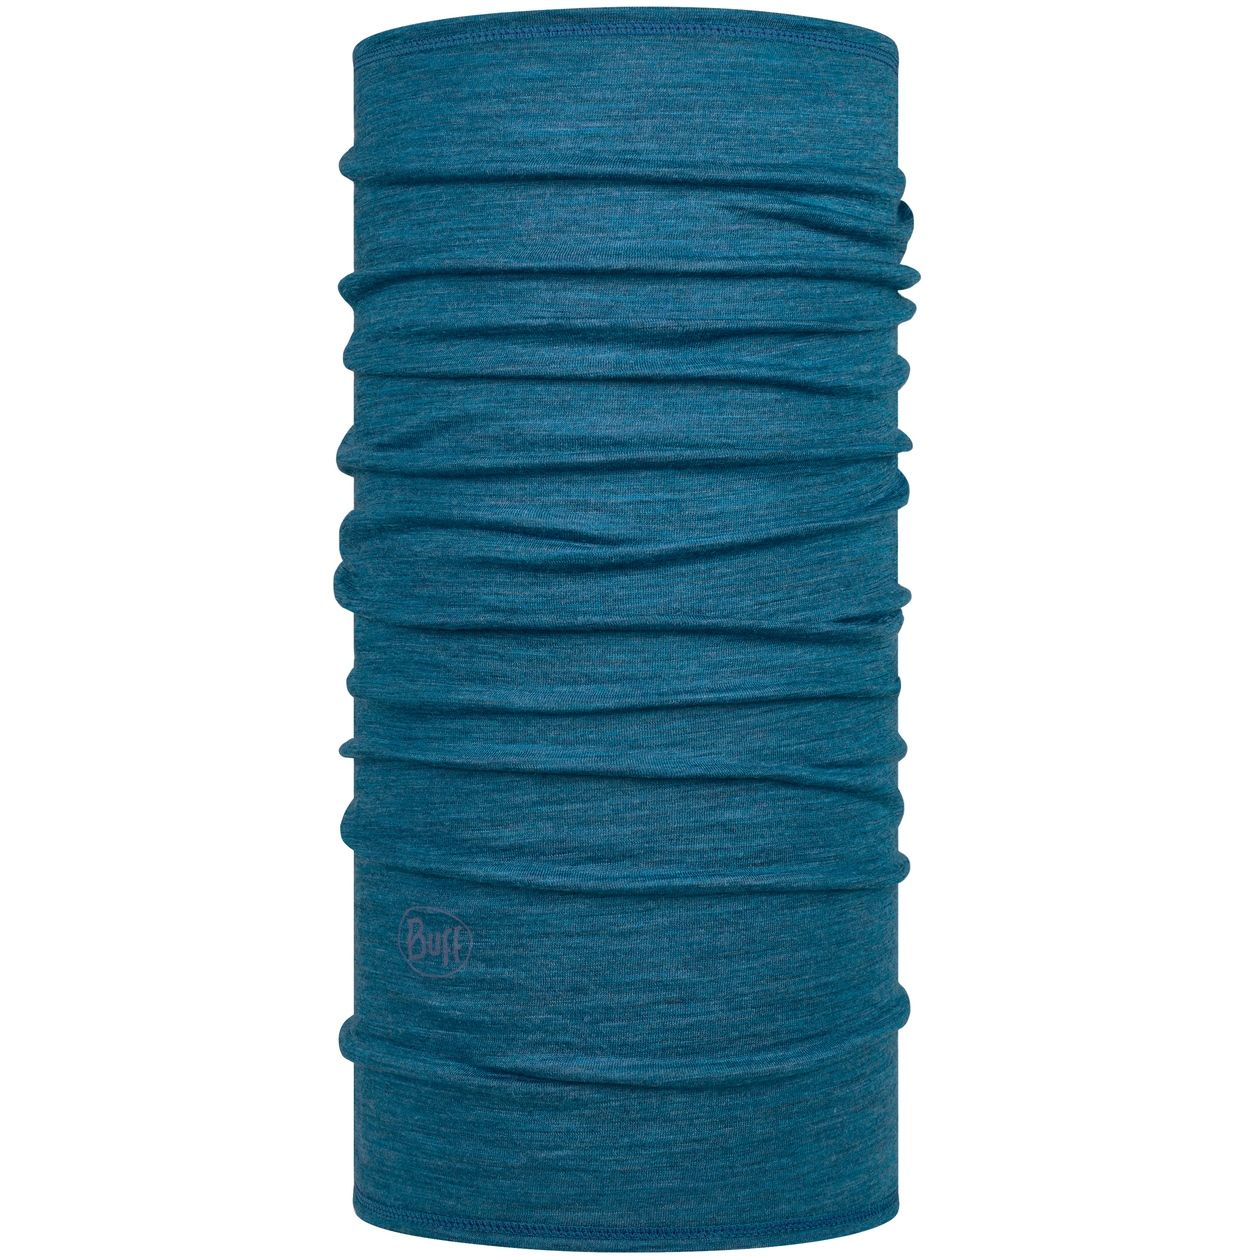 Tour de cou Merino Wool - Solid dusty blue